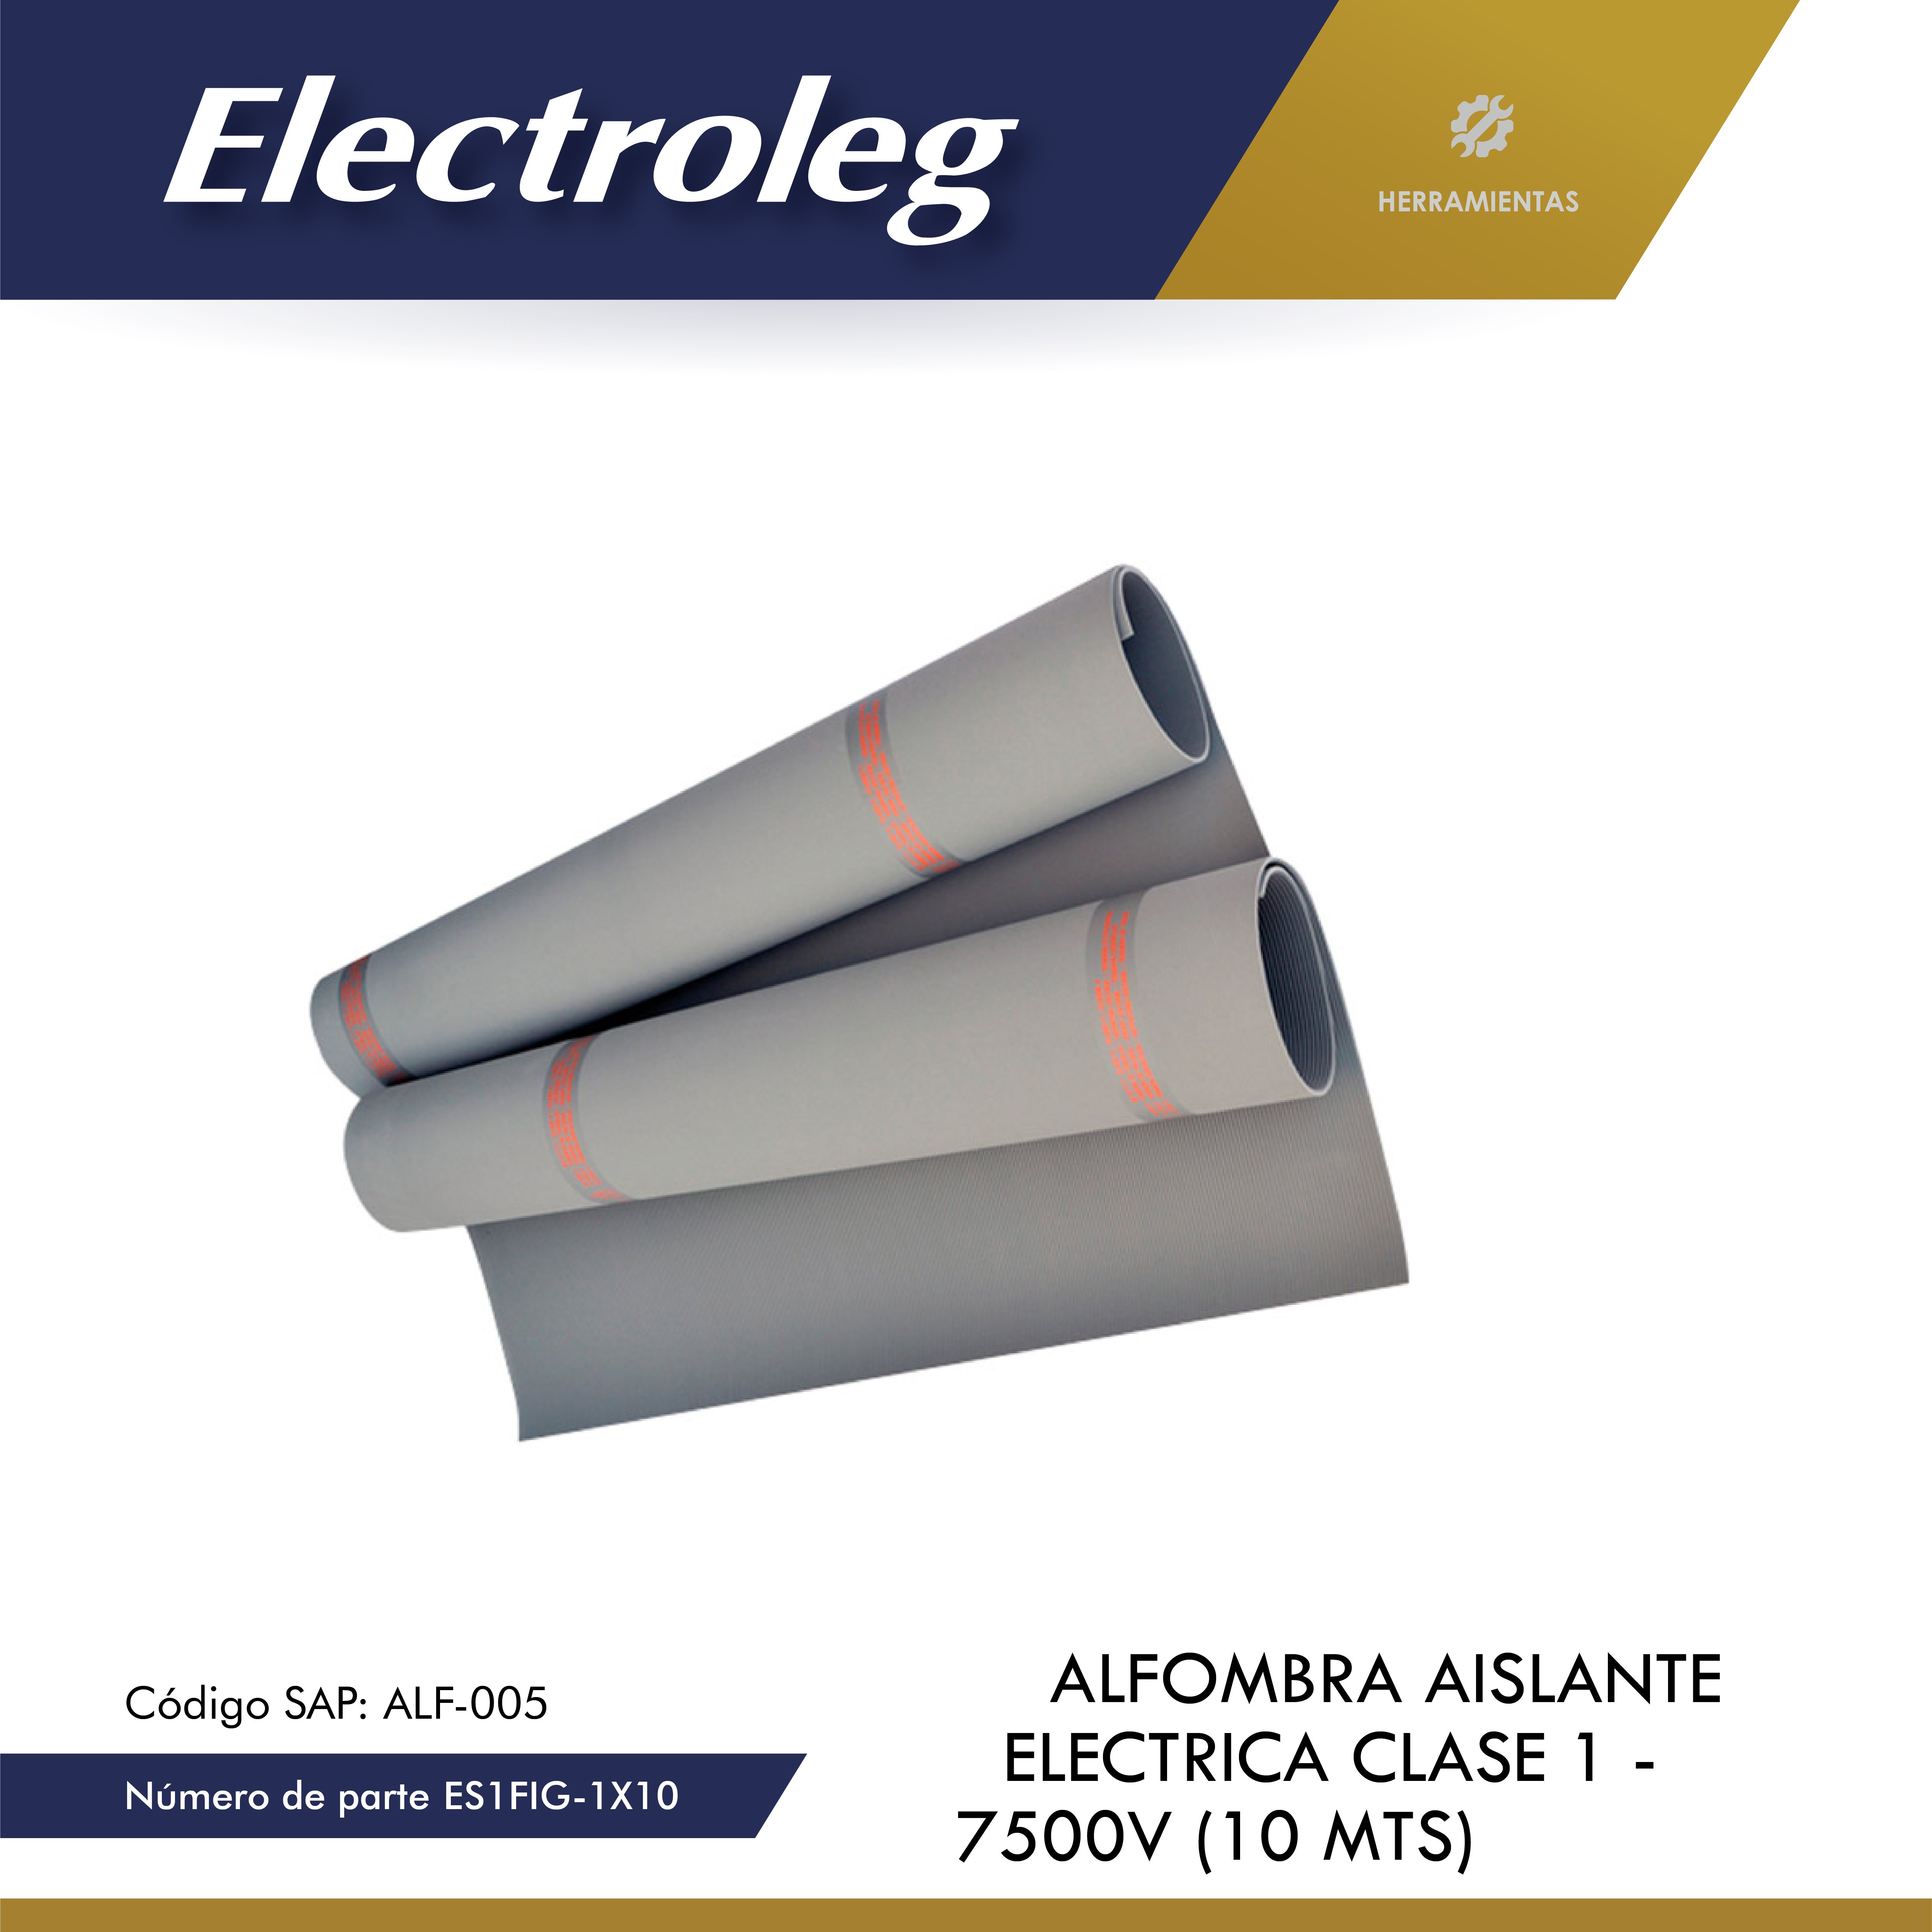 ALFOMBRA AISLANTE ELECTRICA CLASE 1 - 7500V (10 MTS) ES1FIG-1X10